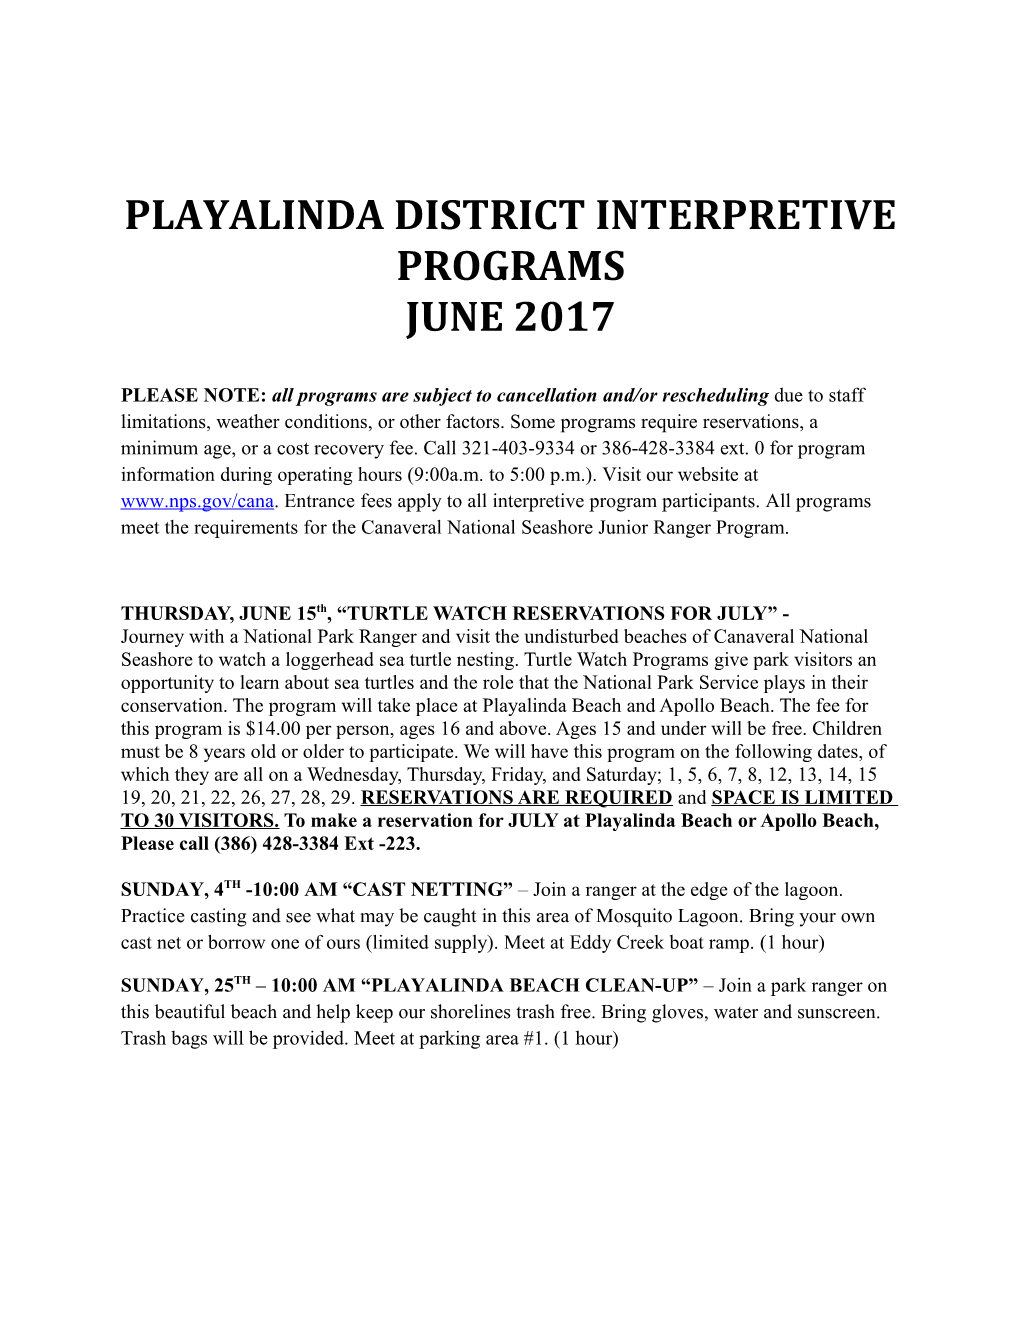 Playalinda District Interpretive